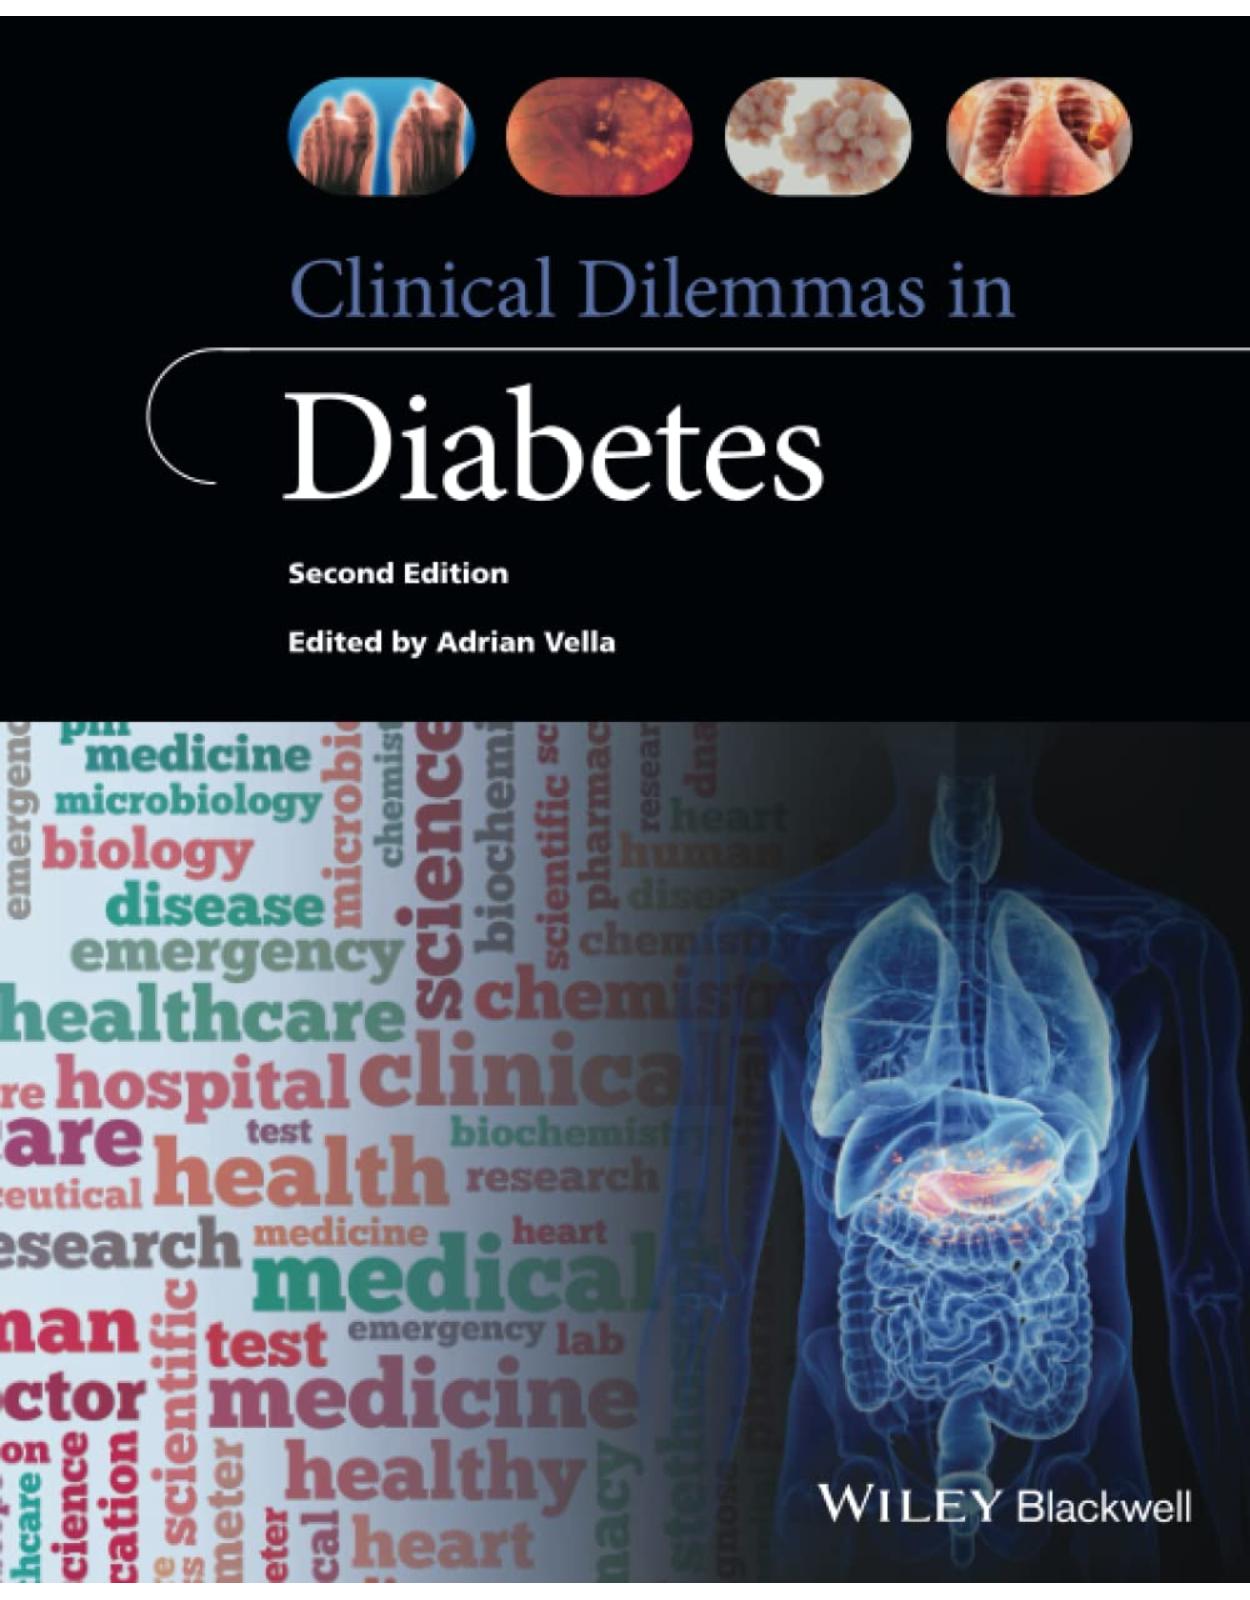 Clinical Dilemmas in Diabetes